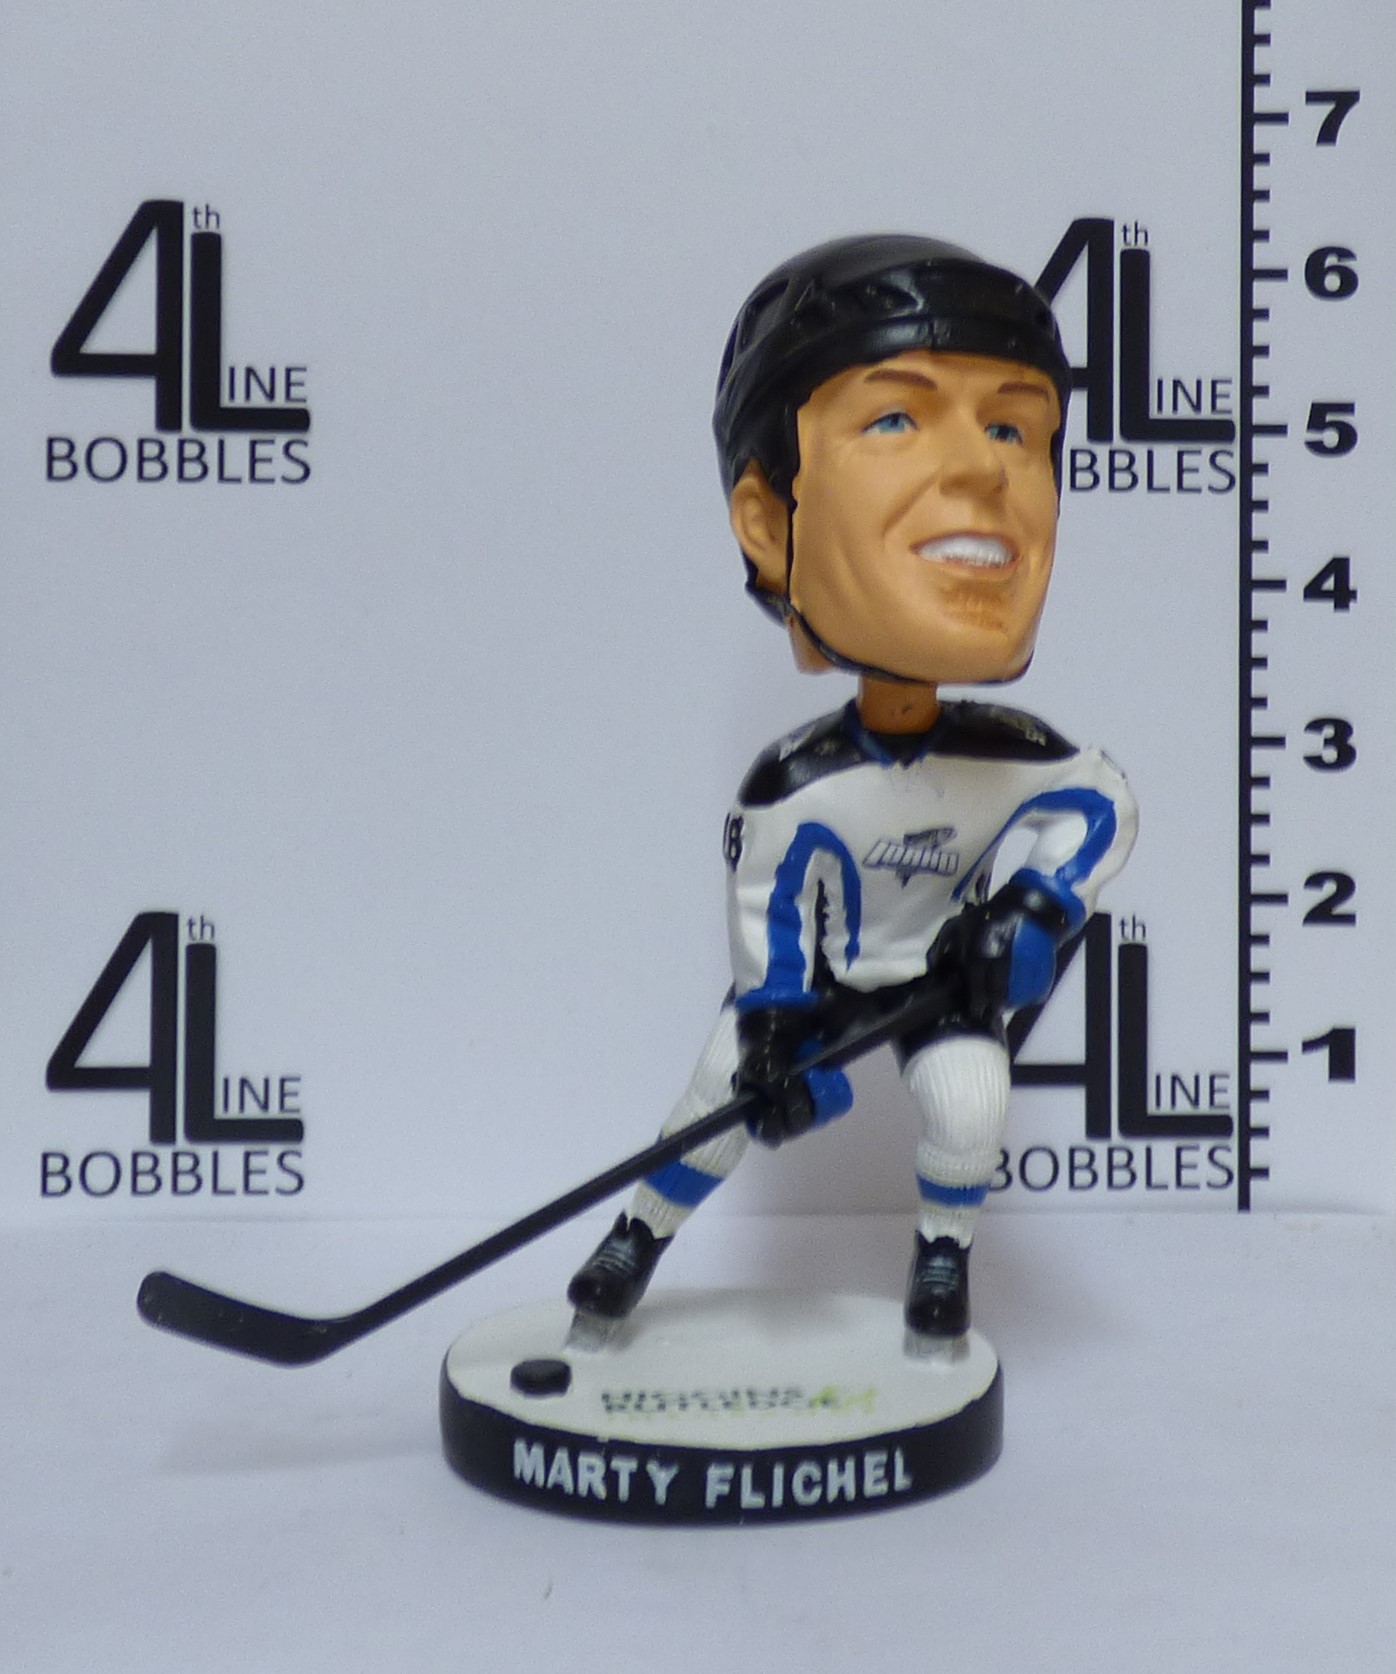 Marty Flichel bobblehead